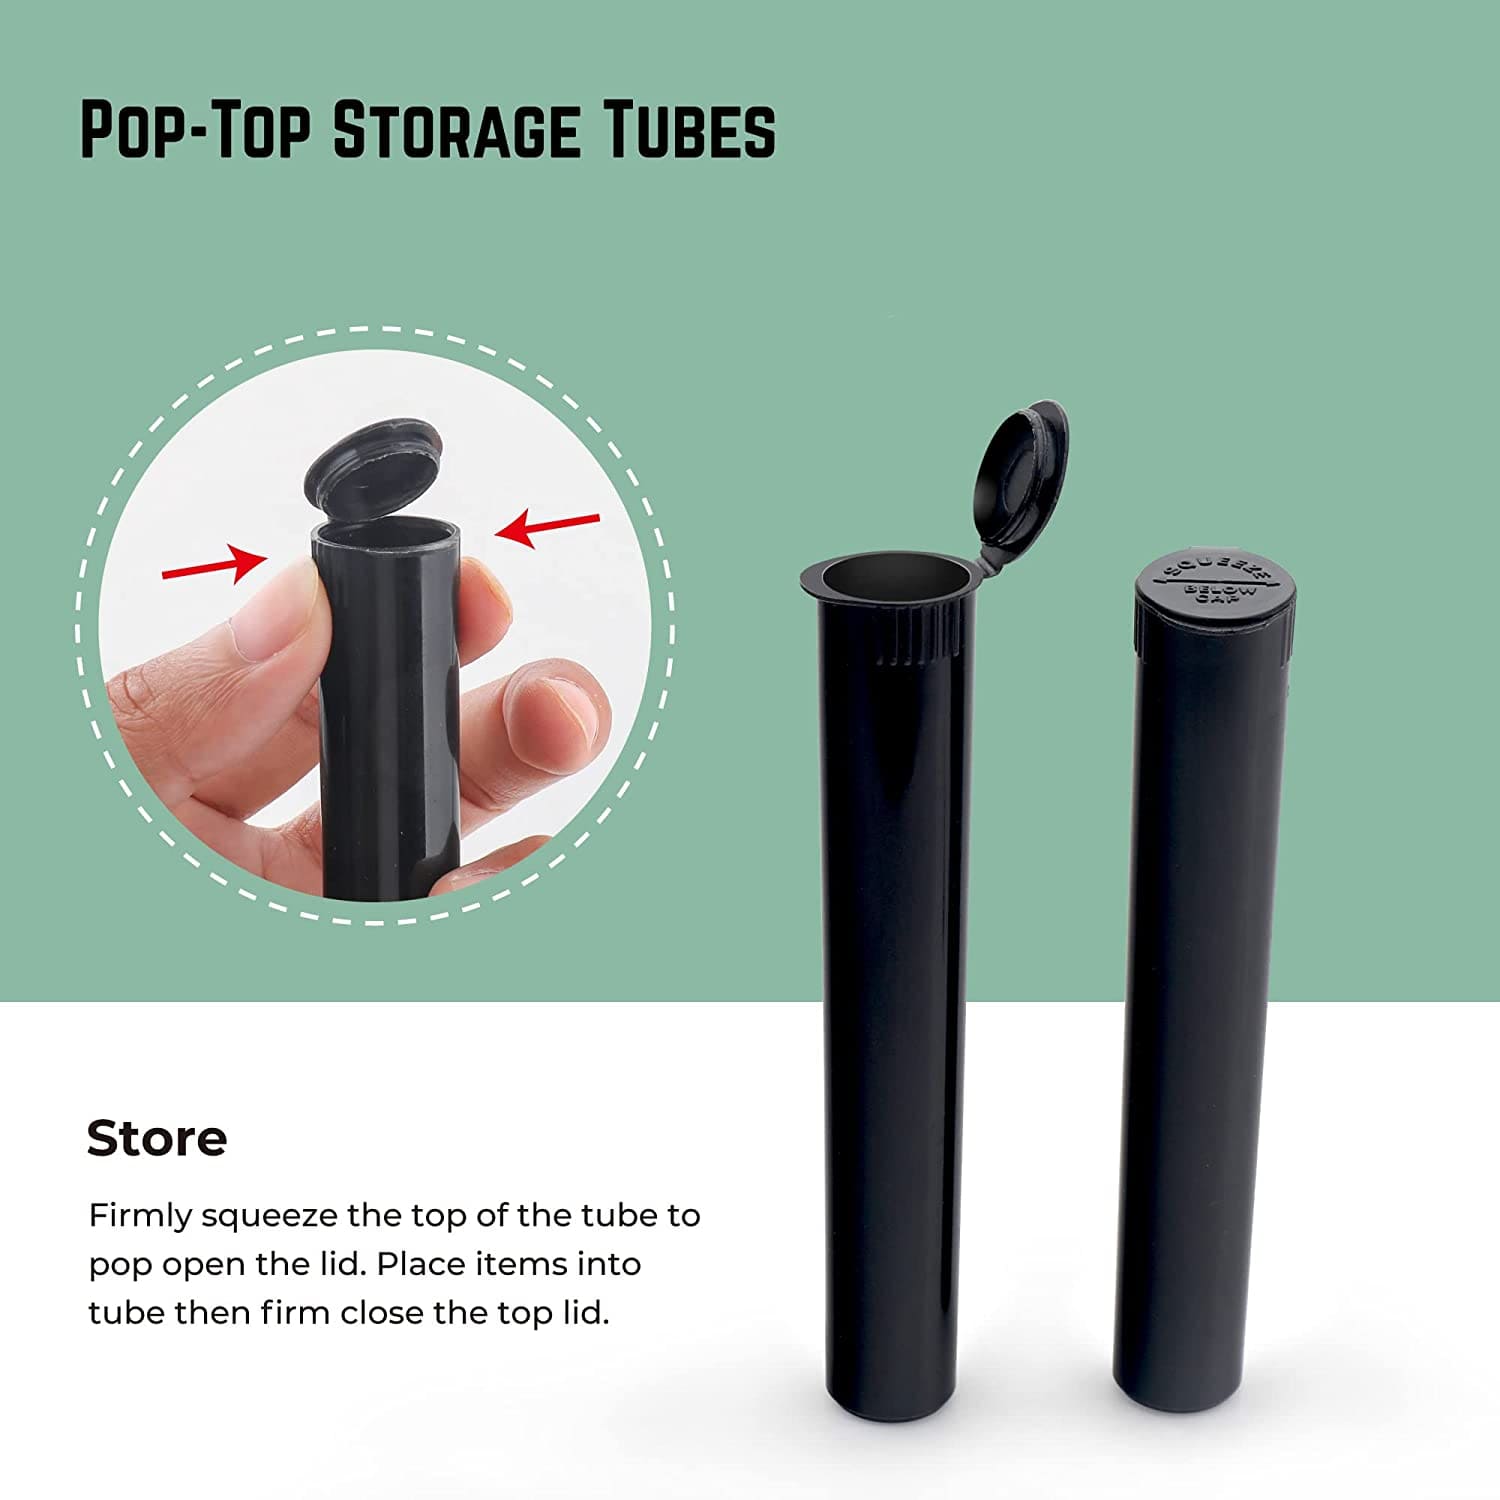 Pop-Top Storage Tubes